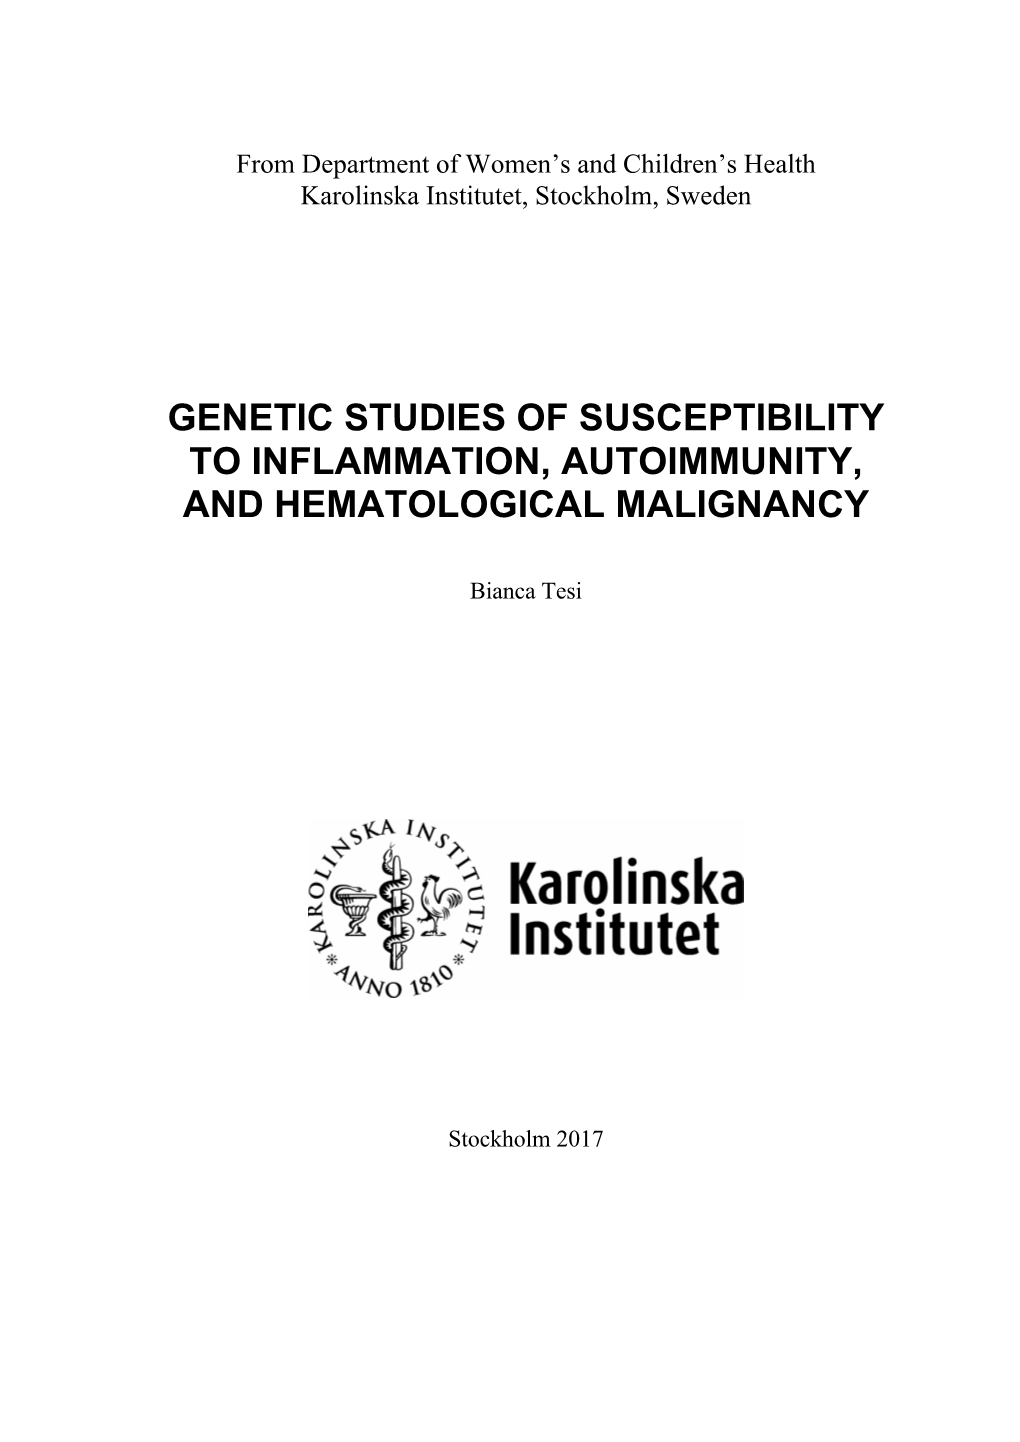 Genetic Studies of Susceptibility to Inflammation, Autoimmunity, and Hematological Malignancy